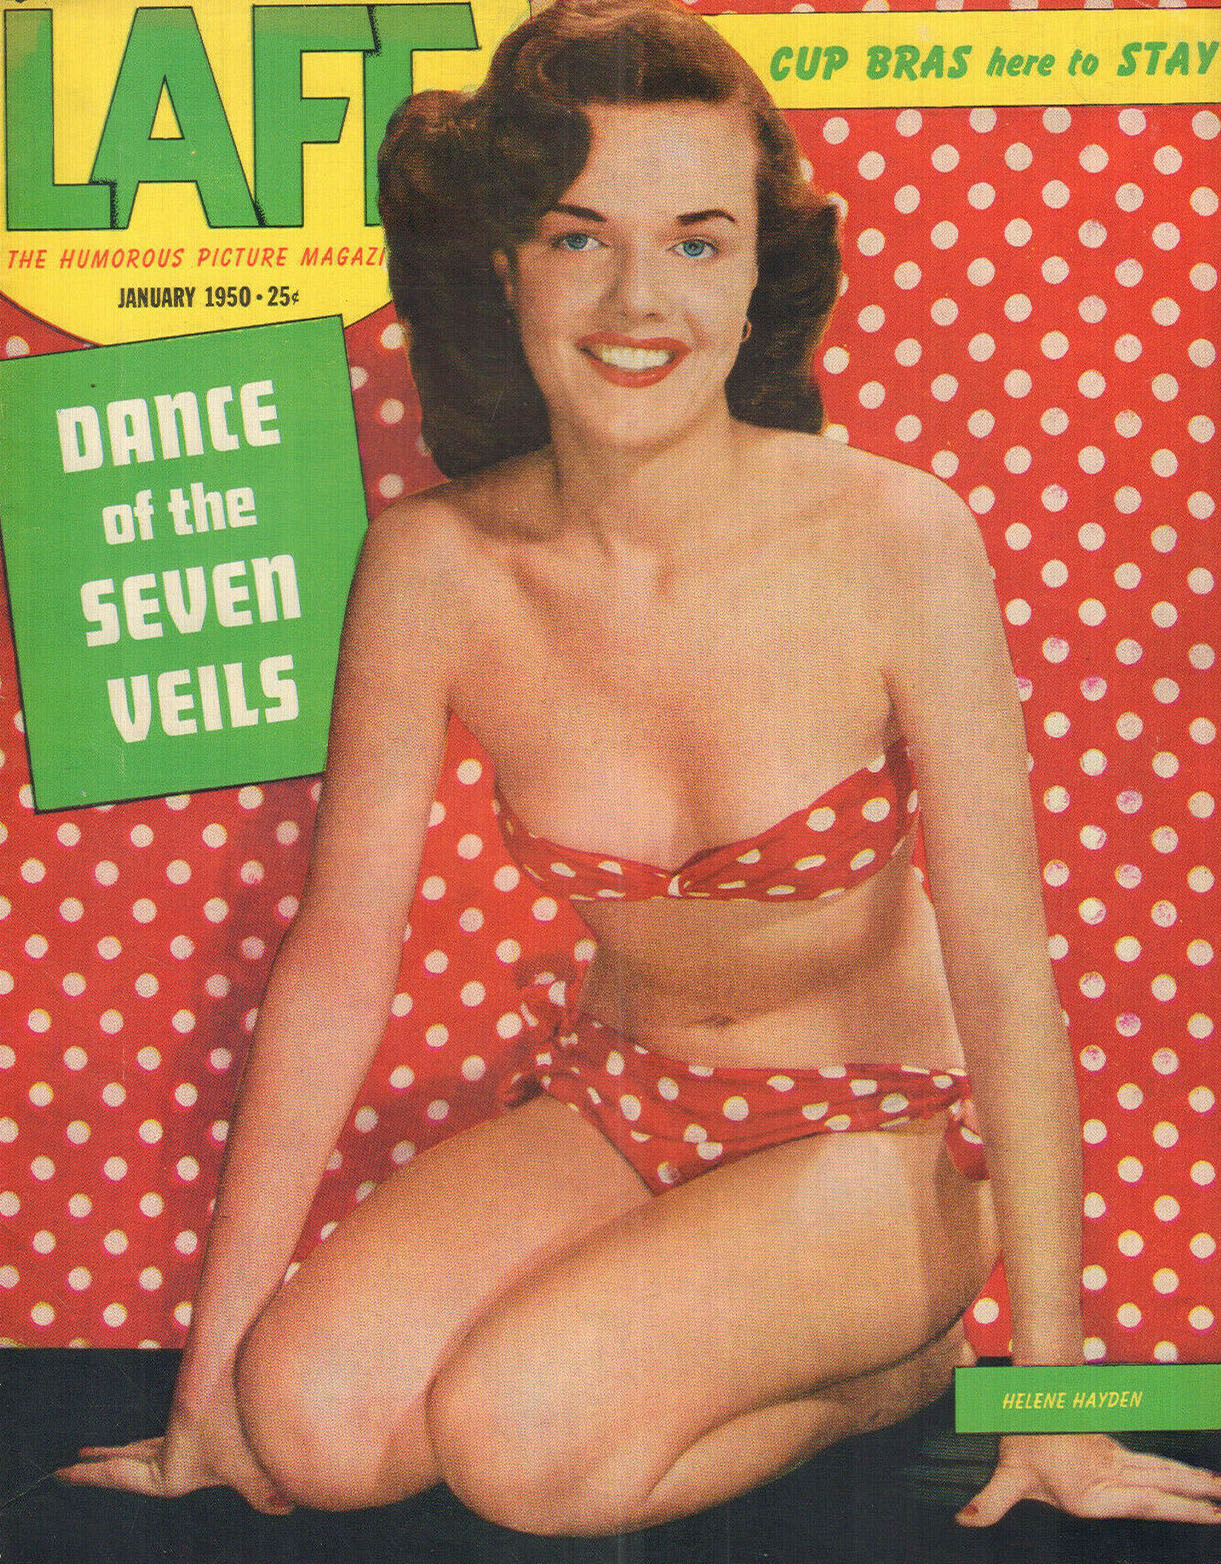 Laff January 1950 magazine back issue Laff magizine back copy 